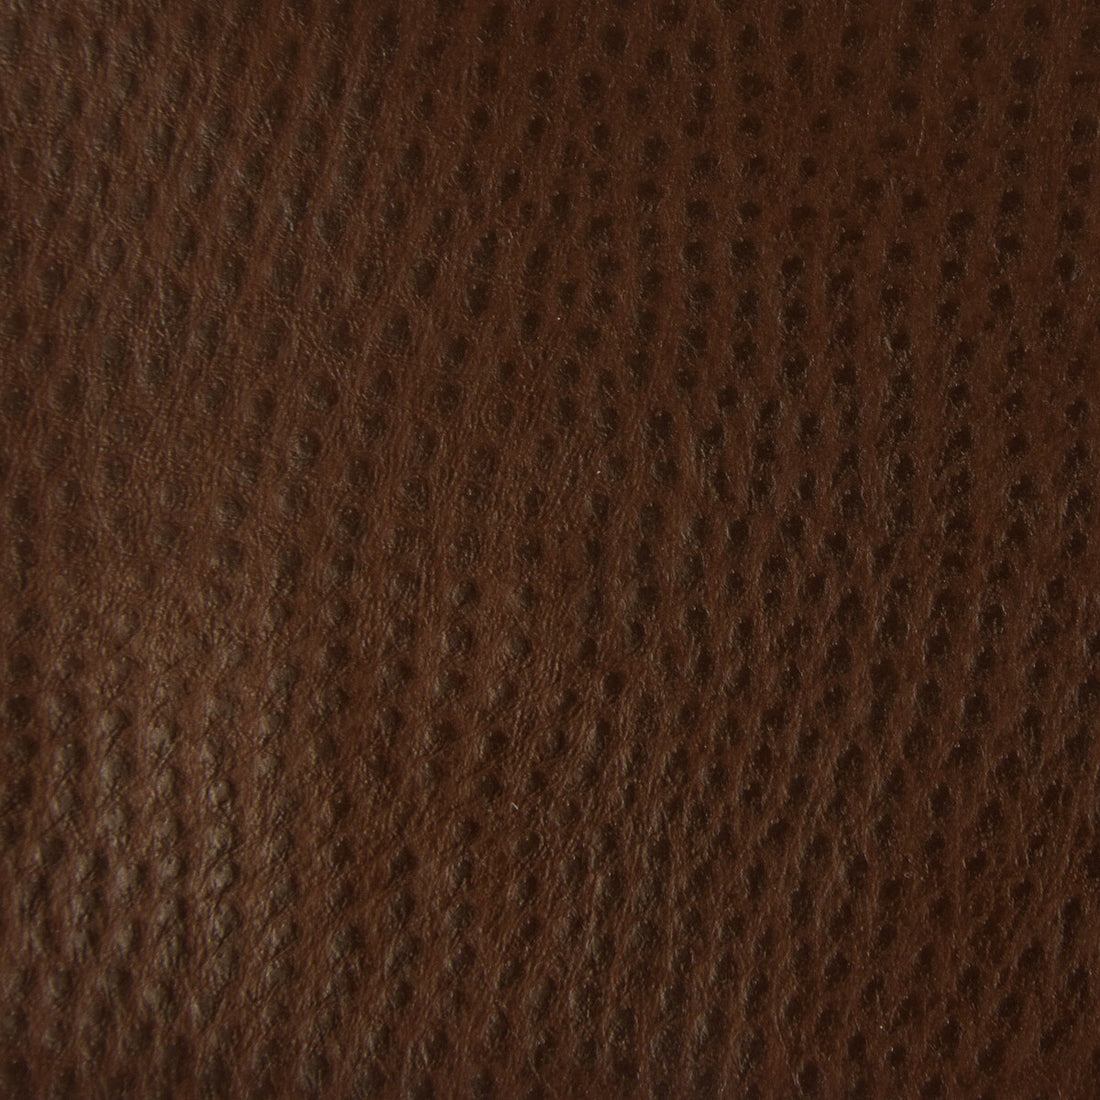 Kravet Contract fabric in belus-6 color - pattern BELUS.6.0 - by Kravet Contract